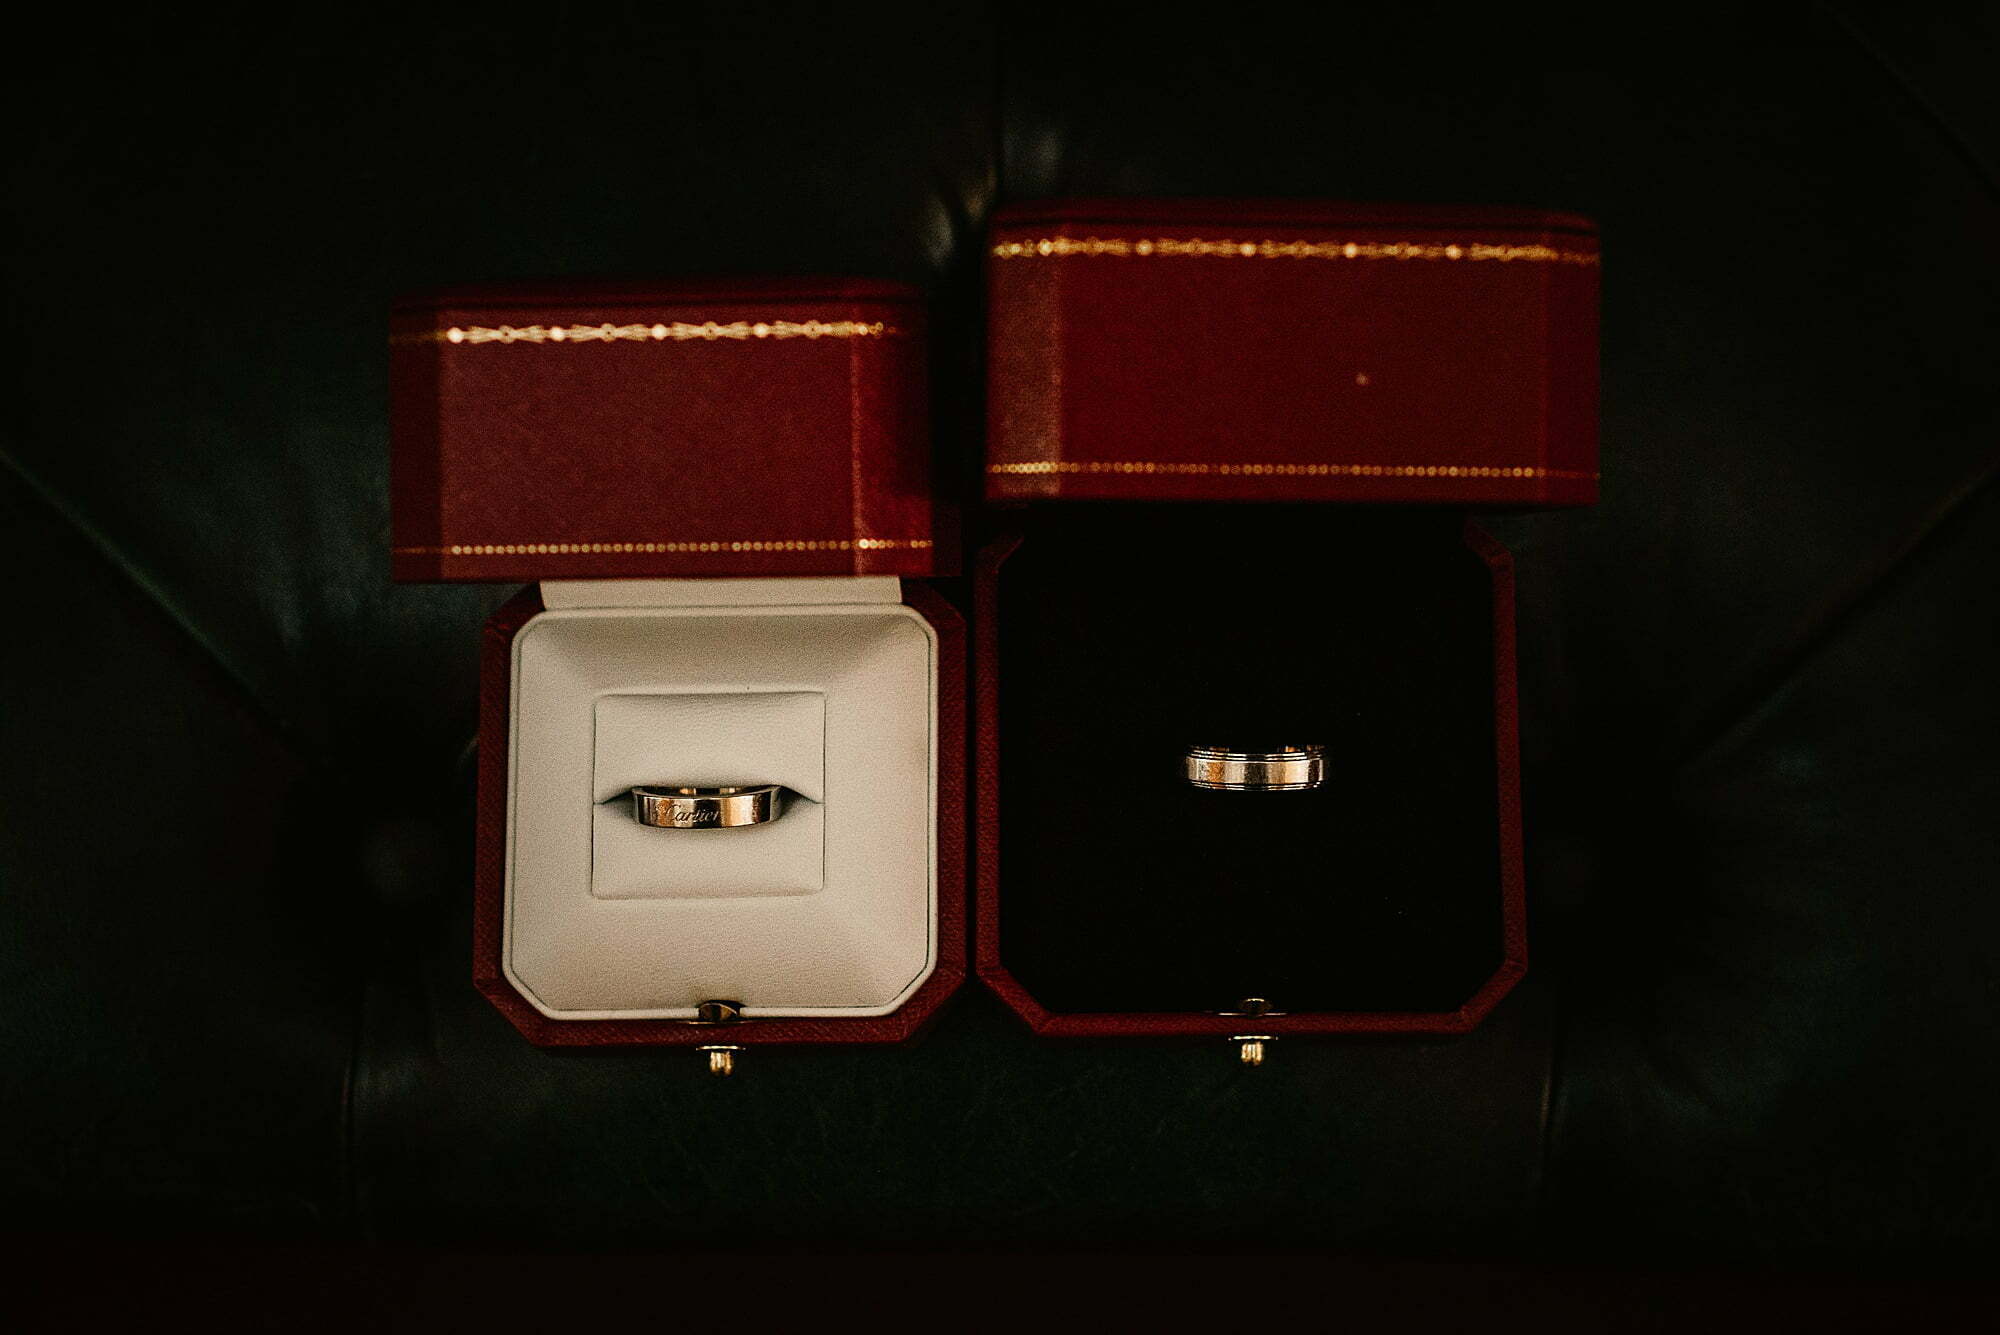 mens wedding rings in red box